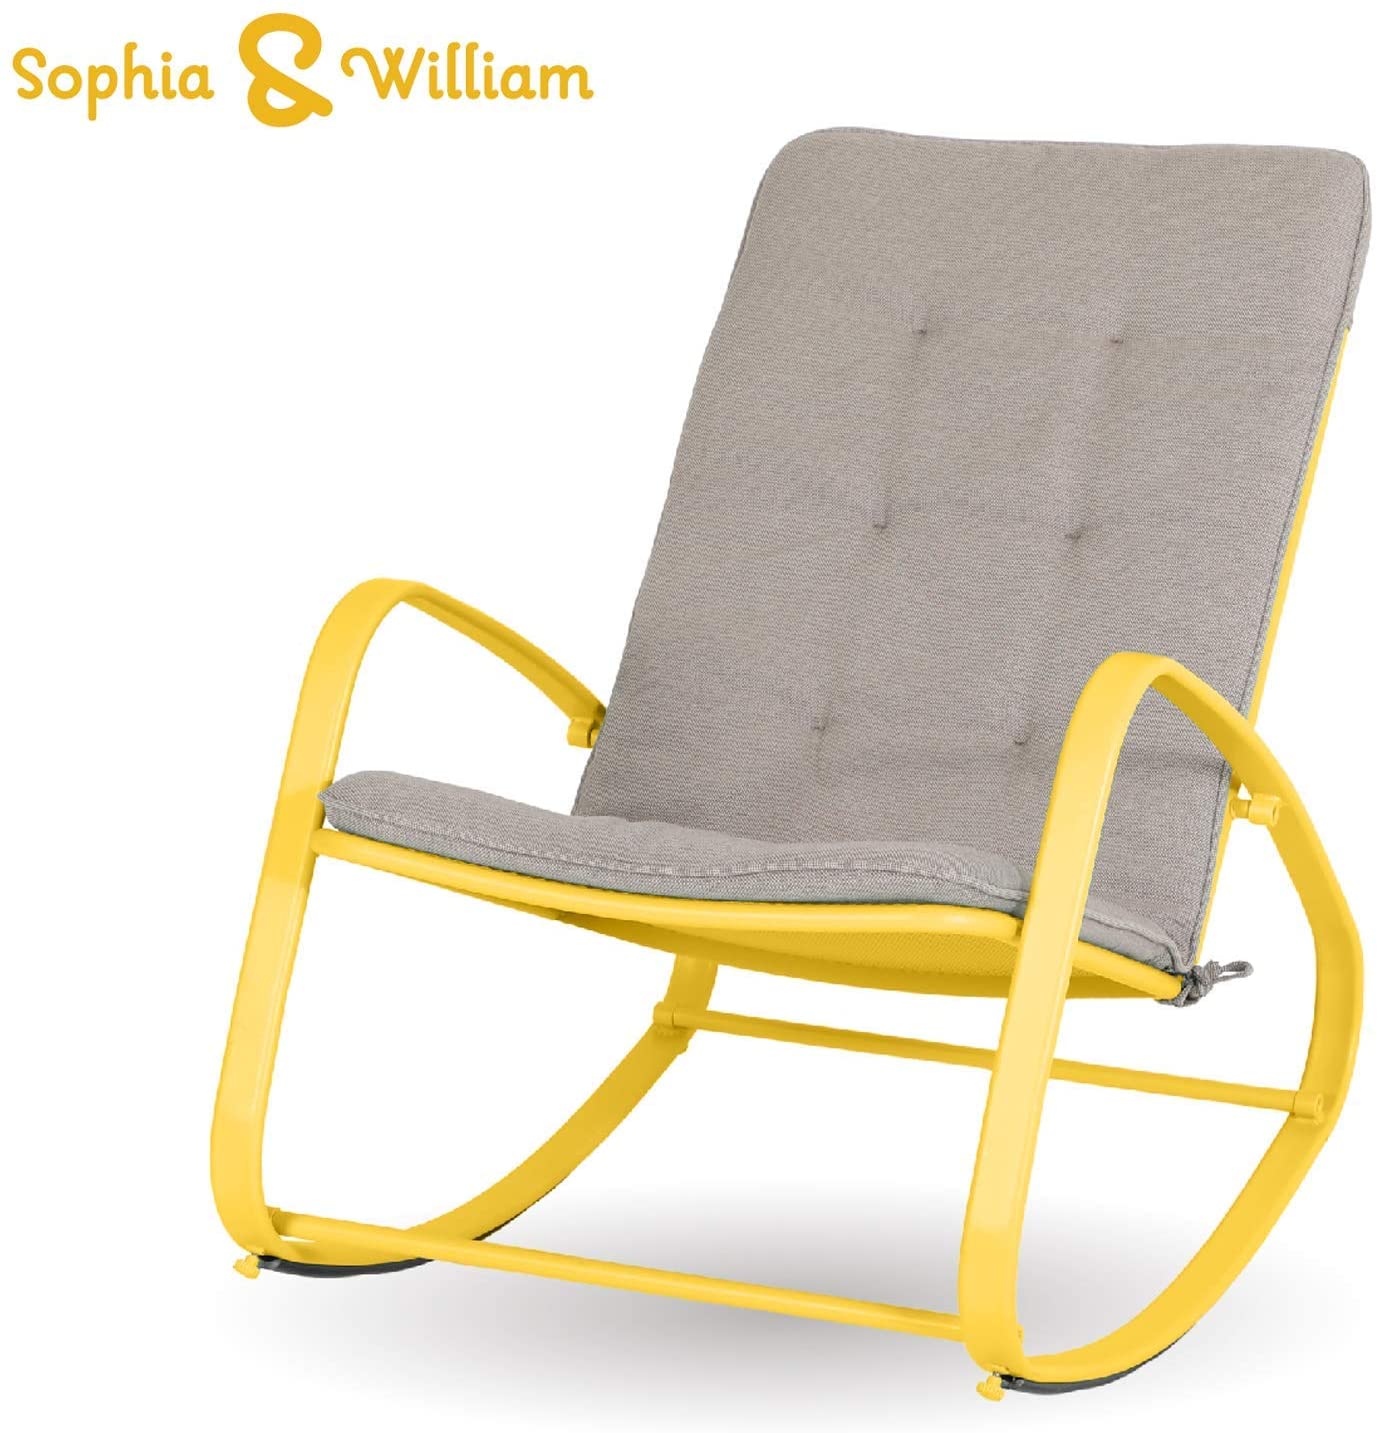 Sophia & William Padded Steel Rocking Patio Chair